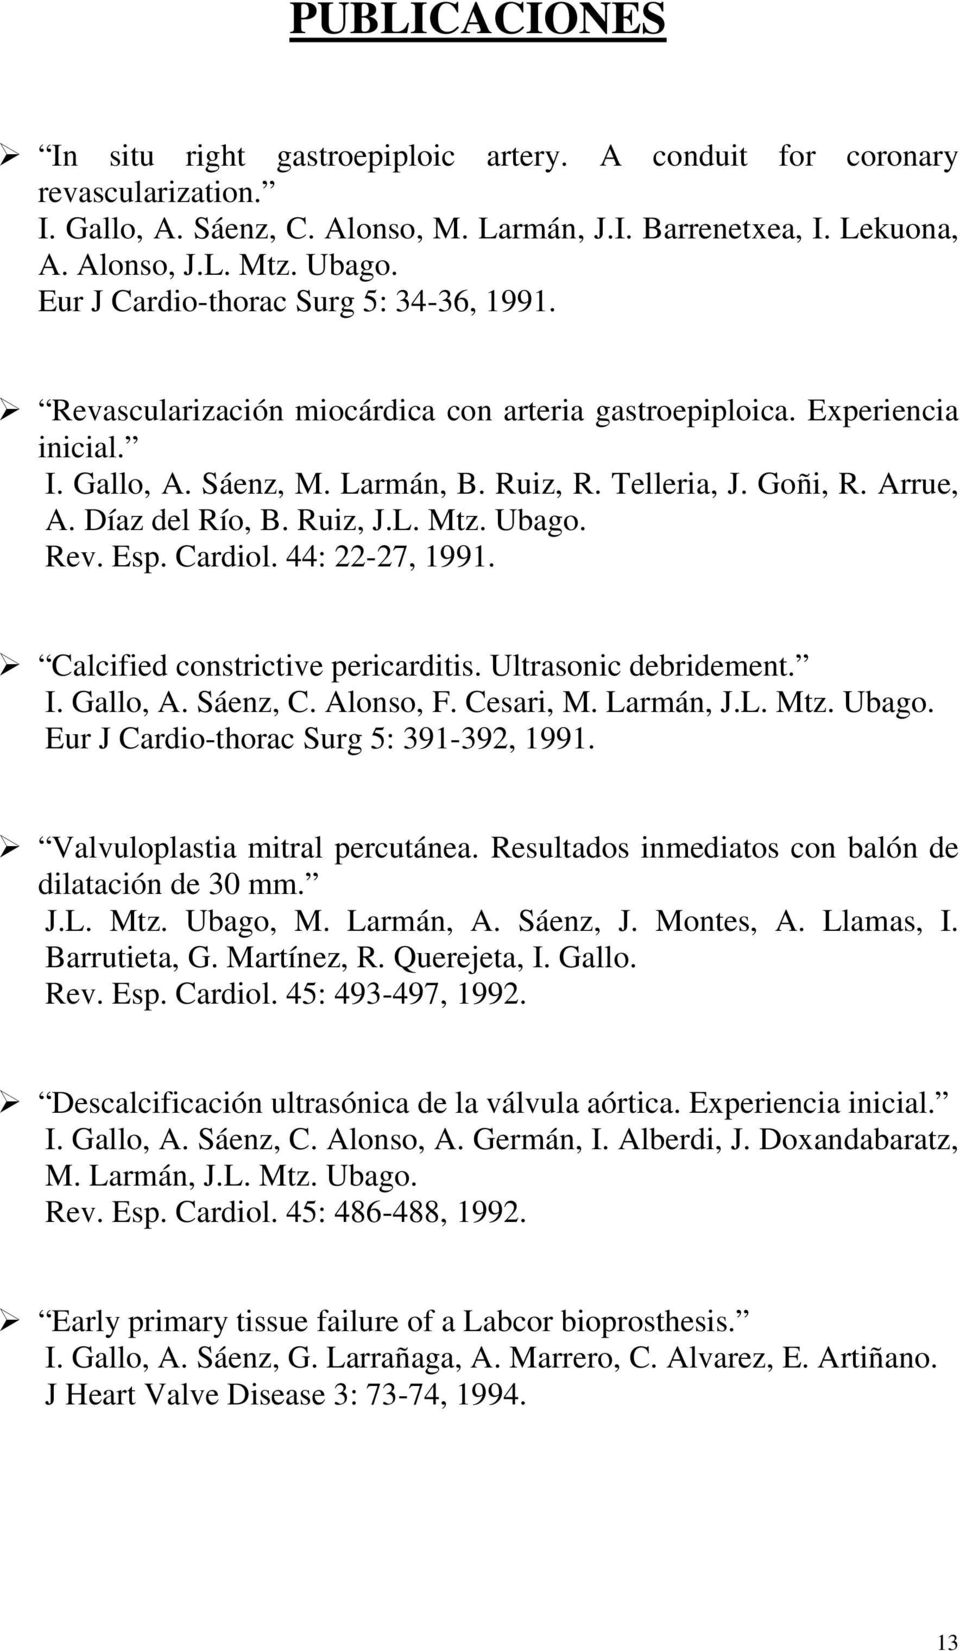 Díaz del Río, B. Ruiz, J.L. Mtz. Ubago. Rev. Esp. Cardiol. 44: 22-27, 1991. Calcified constrictive pericarditis. Ultrasonic debridement. I. Gallo, A. Sáenz, C. Alonso, F. Cesari, M. Larmán, J.L. Mtz. Ubago. Eur J Cardio-thorac Surg 5: 391-392, 1991.